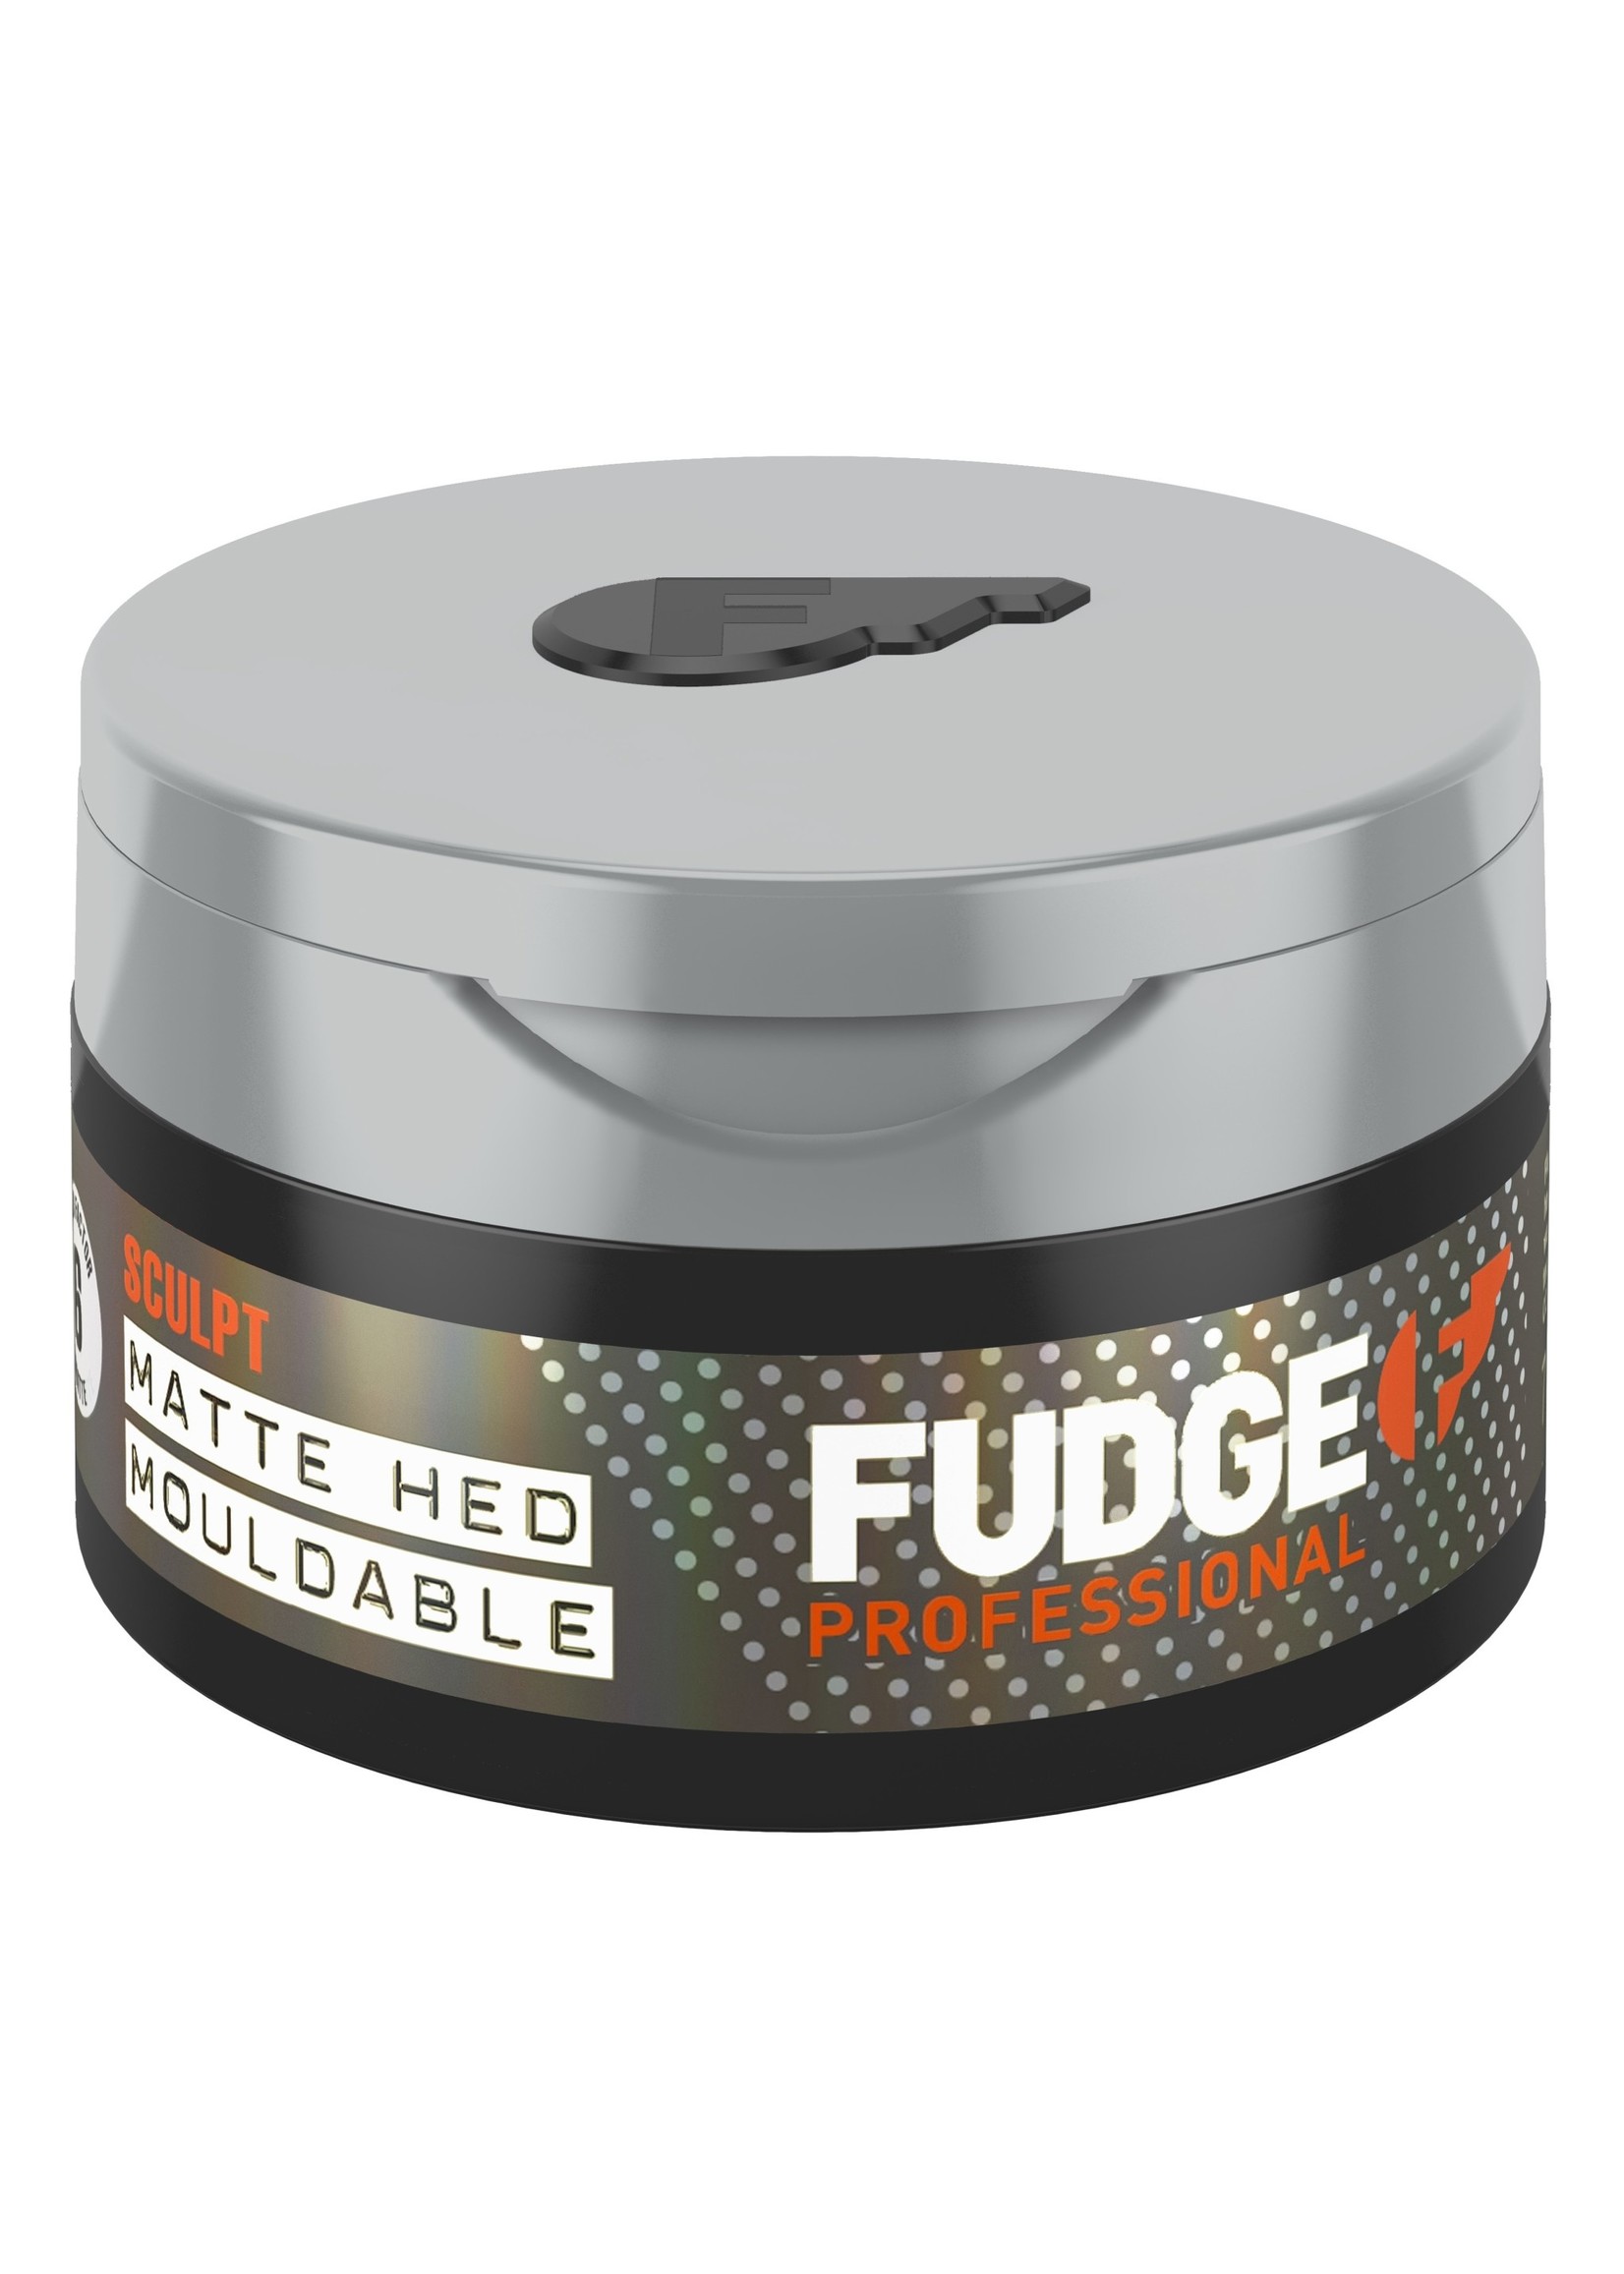 Fudge Fudge Matte Hed Mouldable 75g